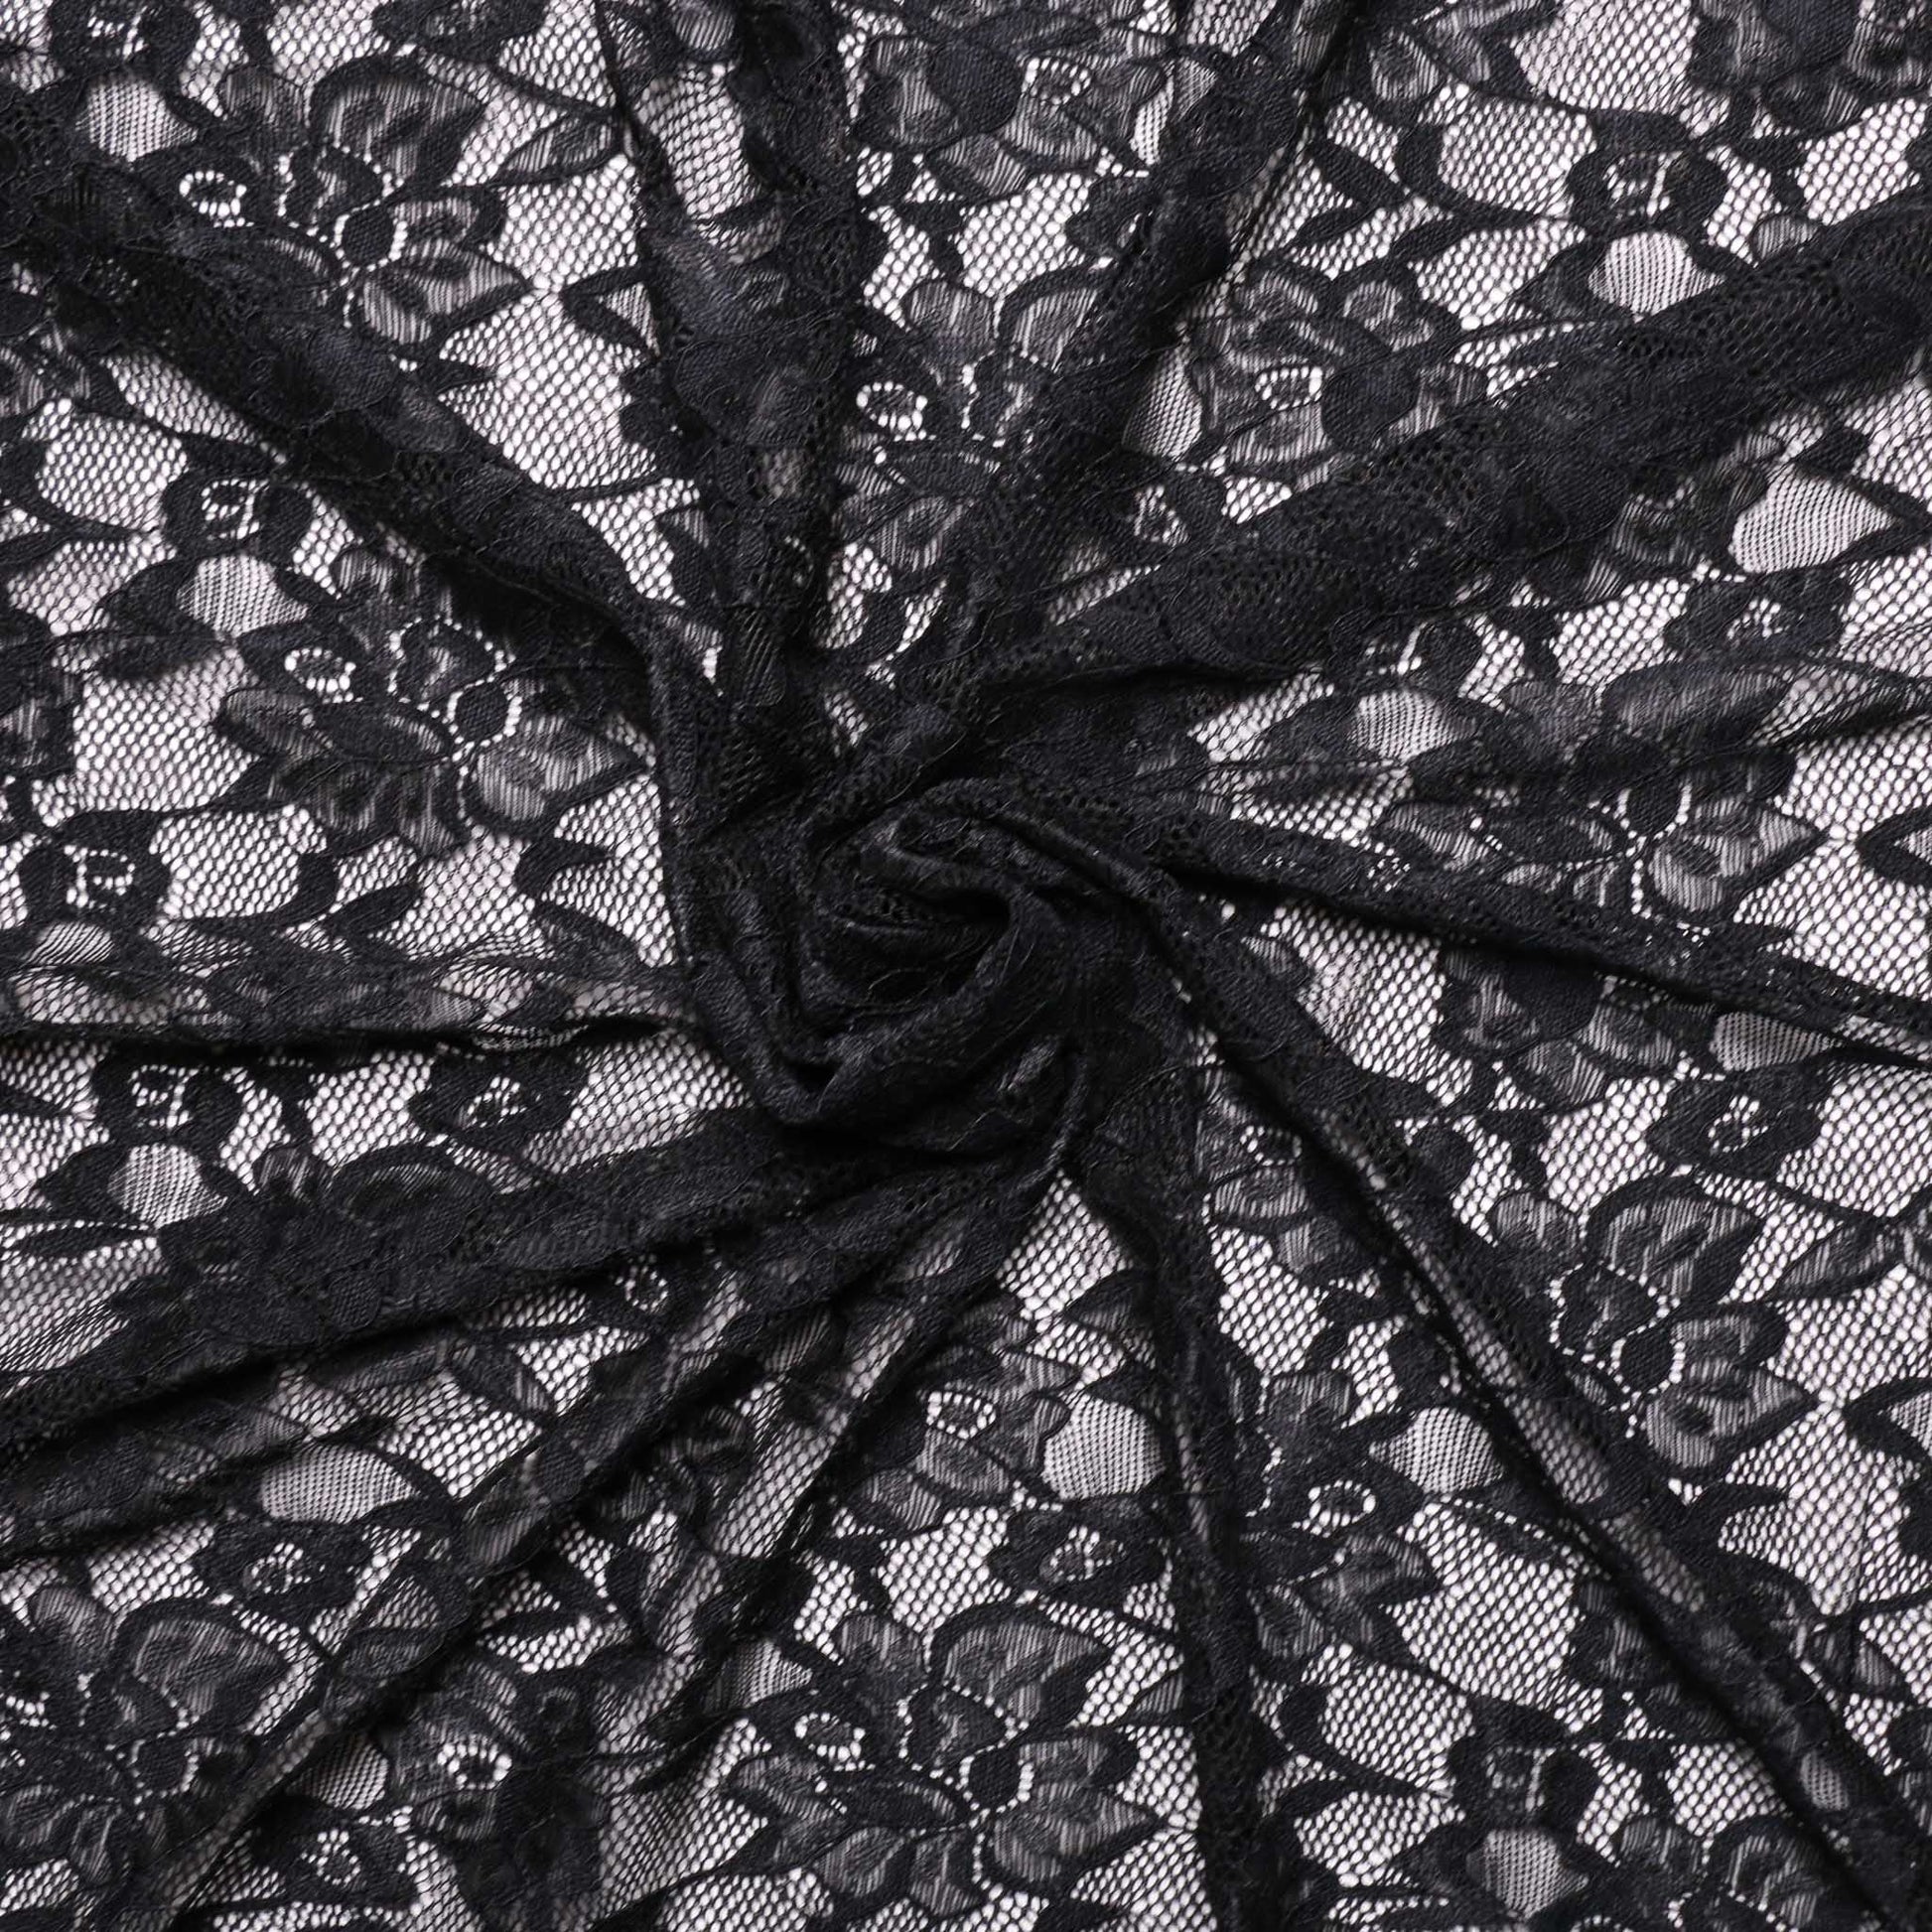 black scalloped edge corded lace dress fabric